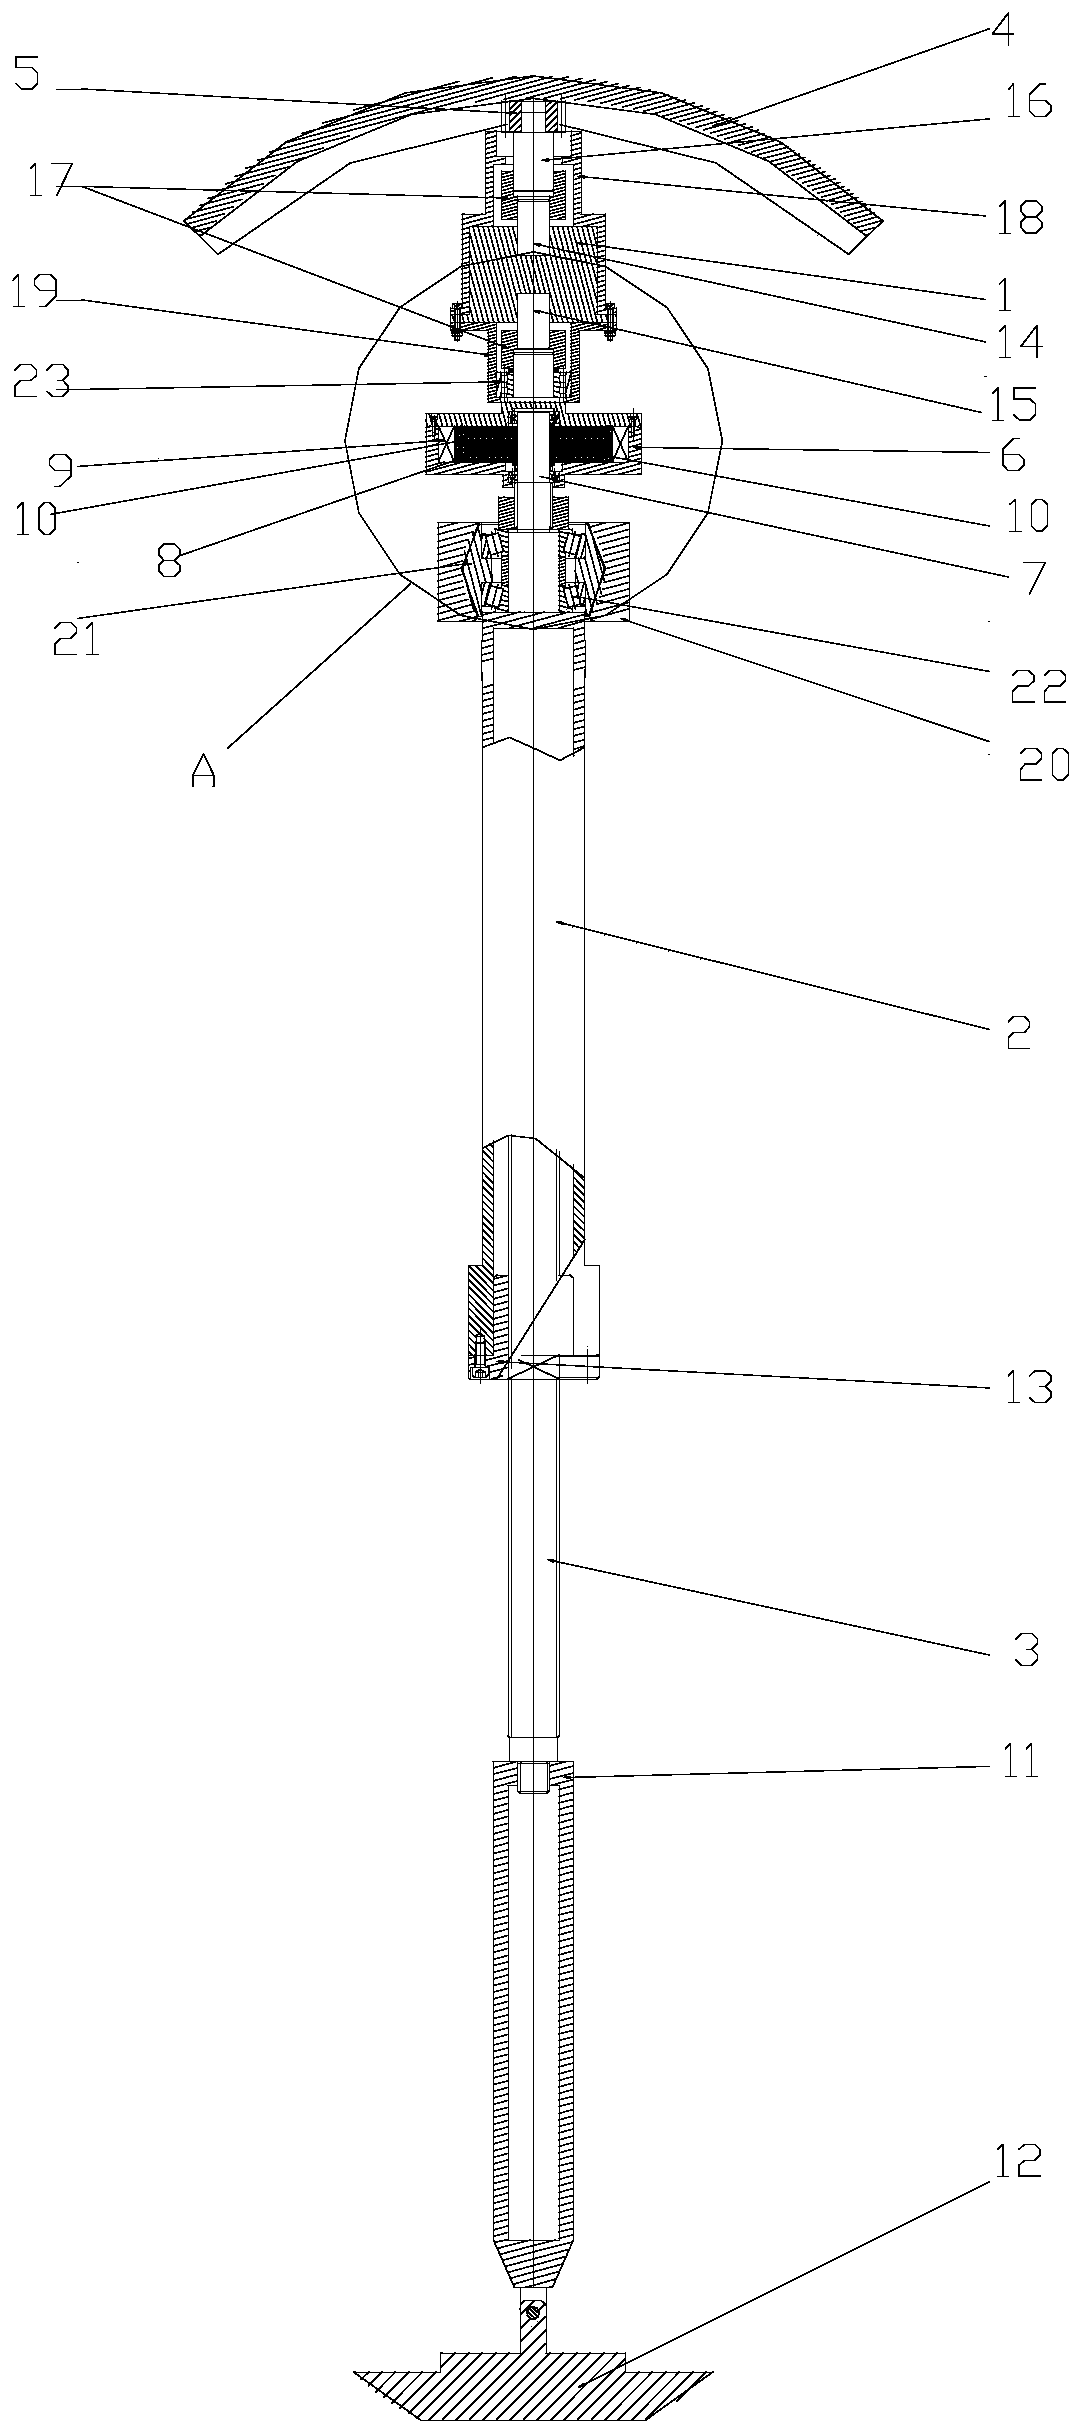 Reusable variable-angle variable-length adaptive buffer landing mechanism